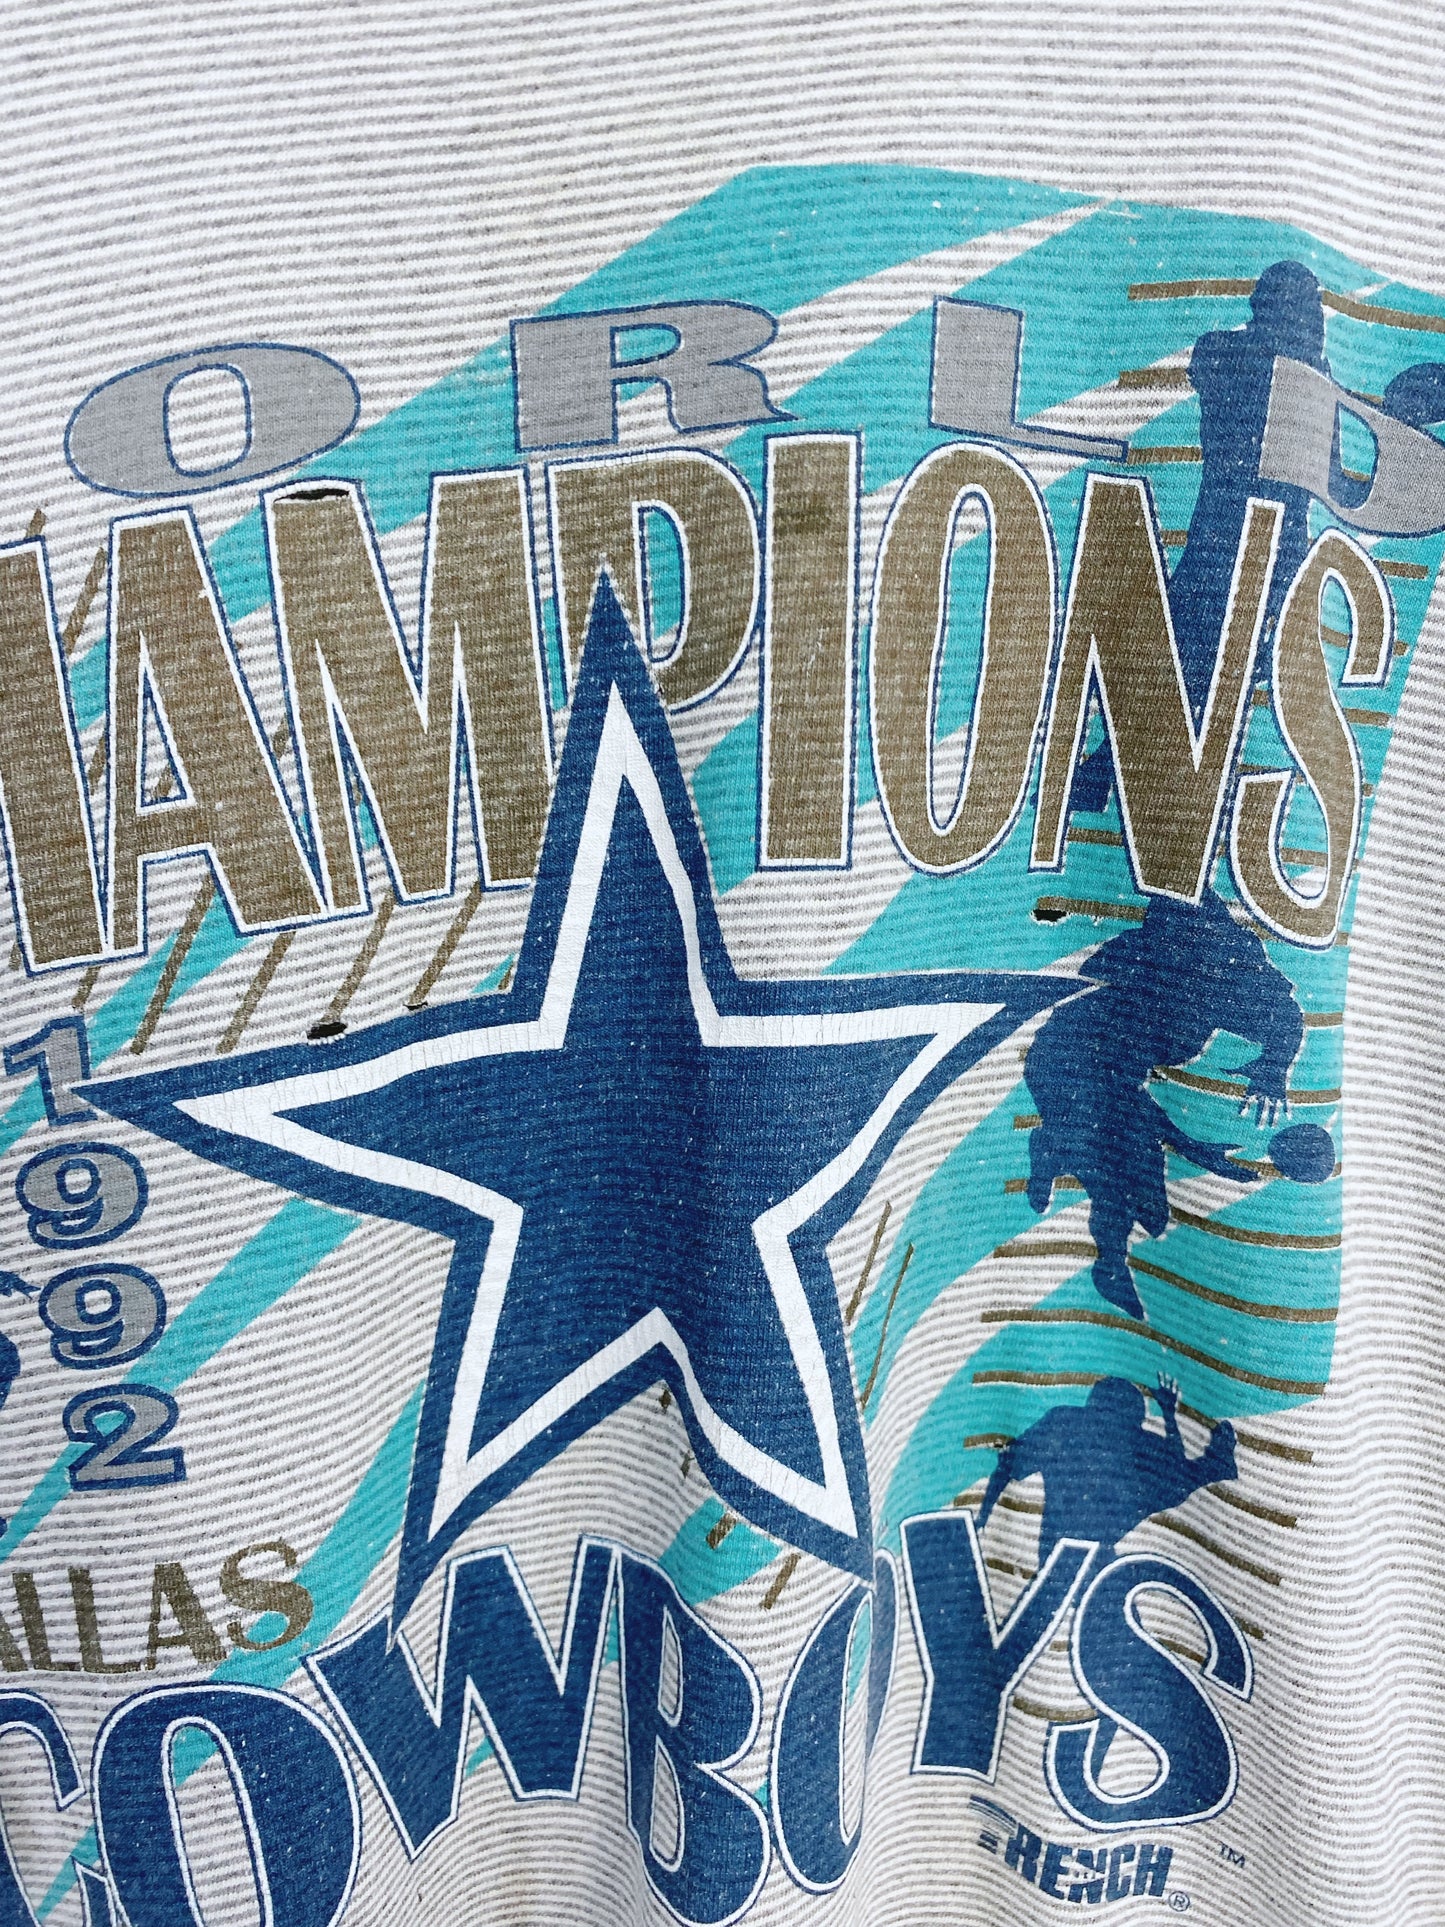 Vintage 1992 Dallas Cowboys Championship T-shirt L